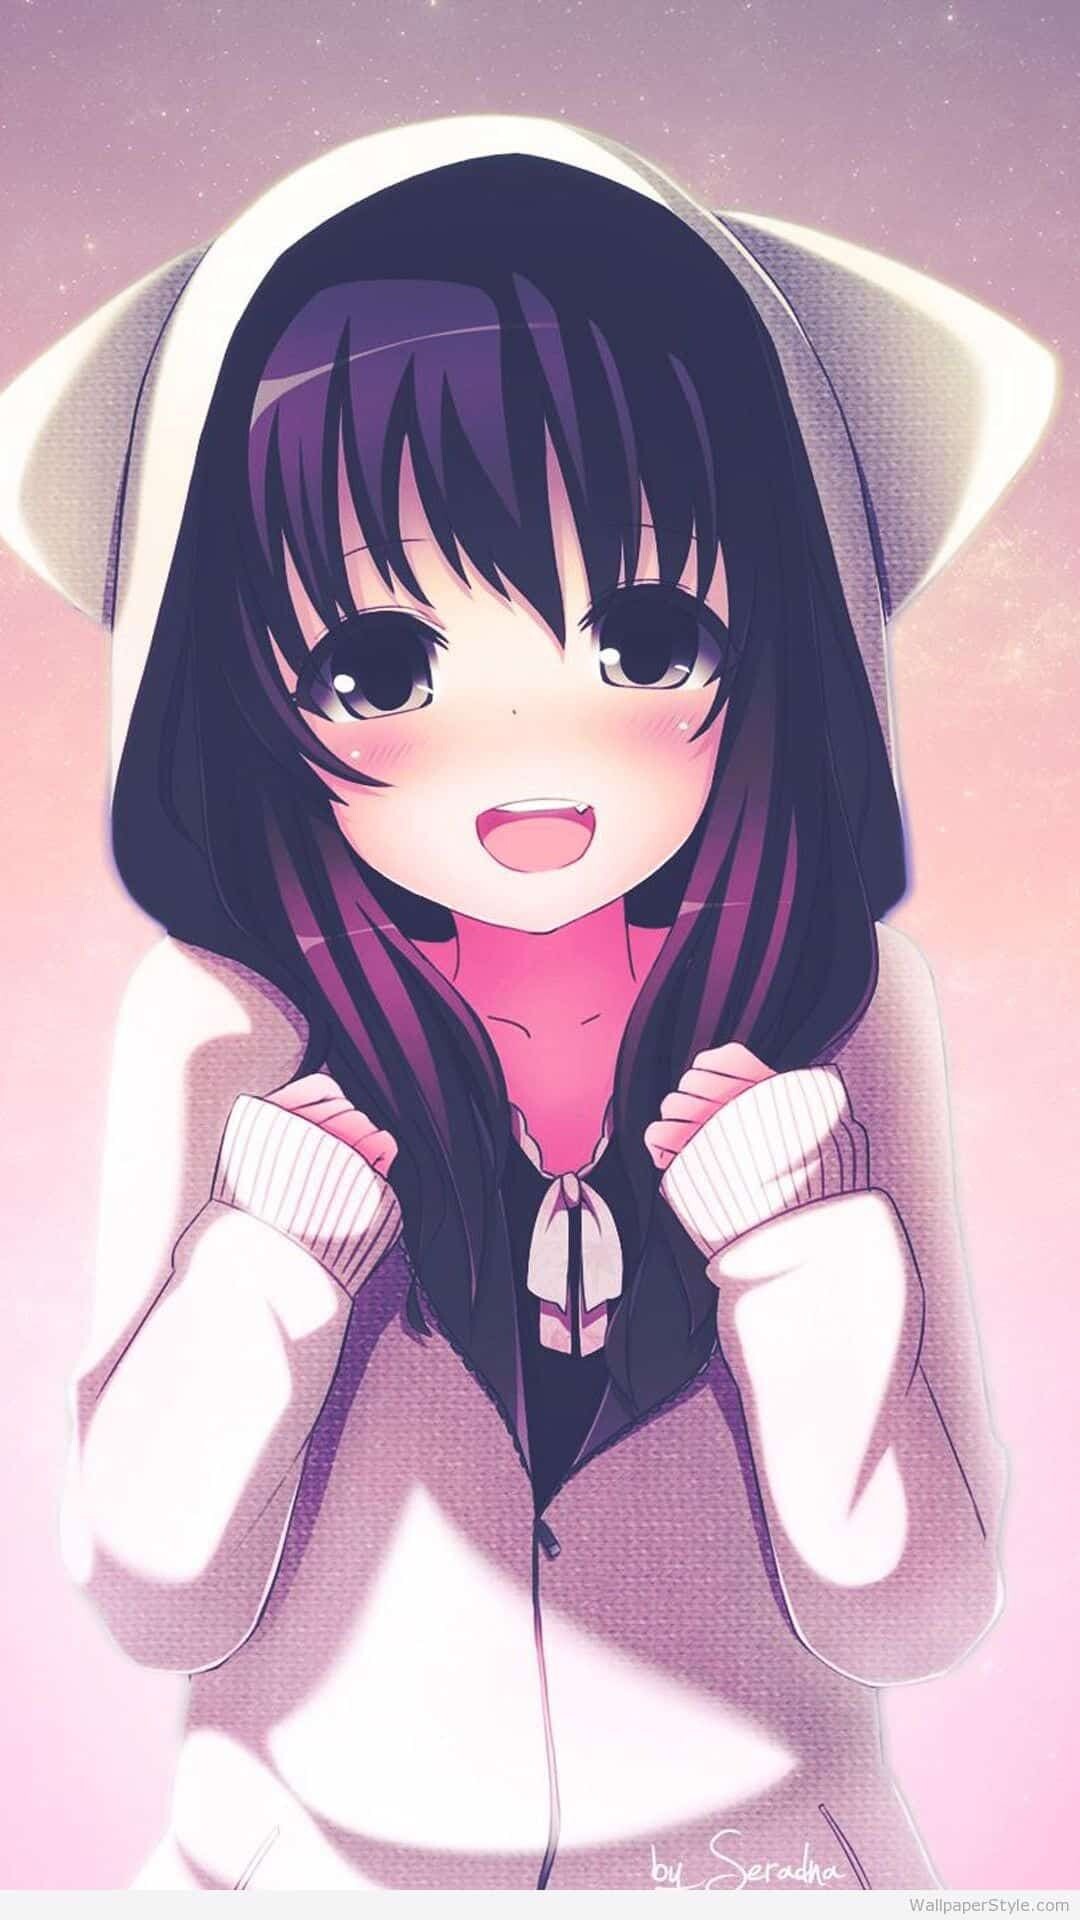 Girly: Anime and manga character, A girl wearing a pink hoodie, A female cartoon character. 1080x1920 Full HD Wallpaper.